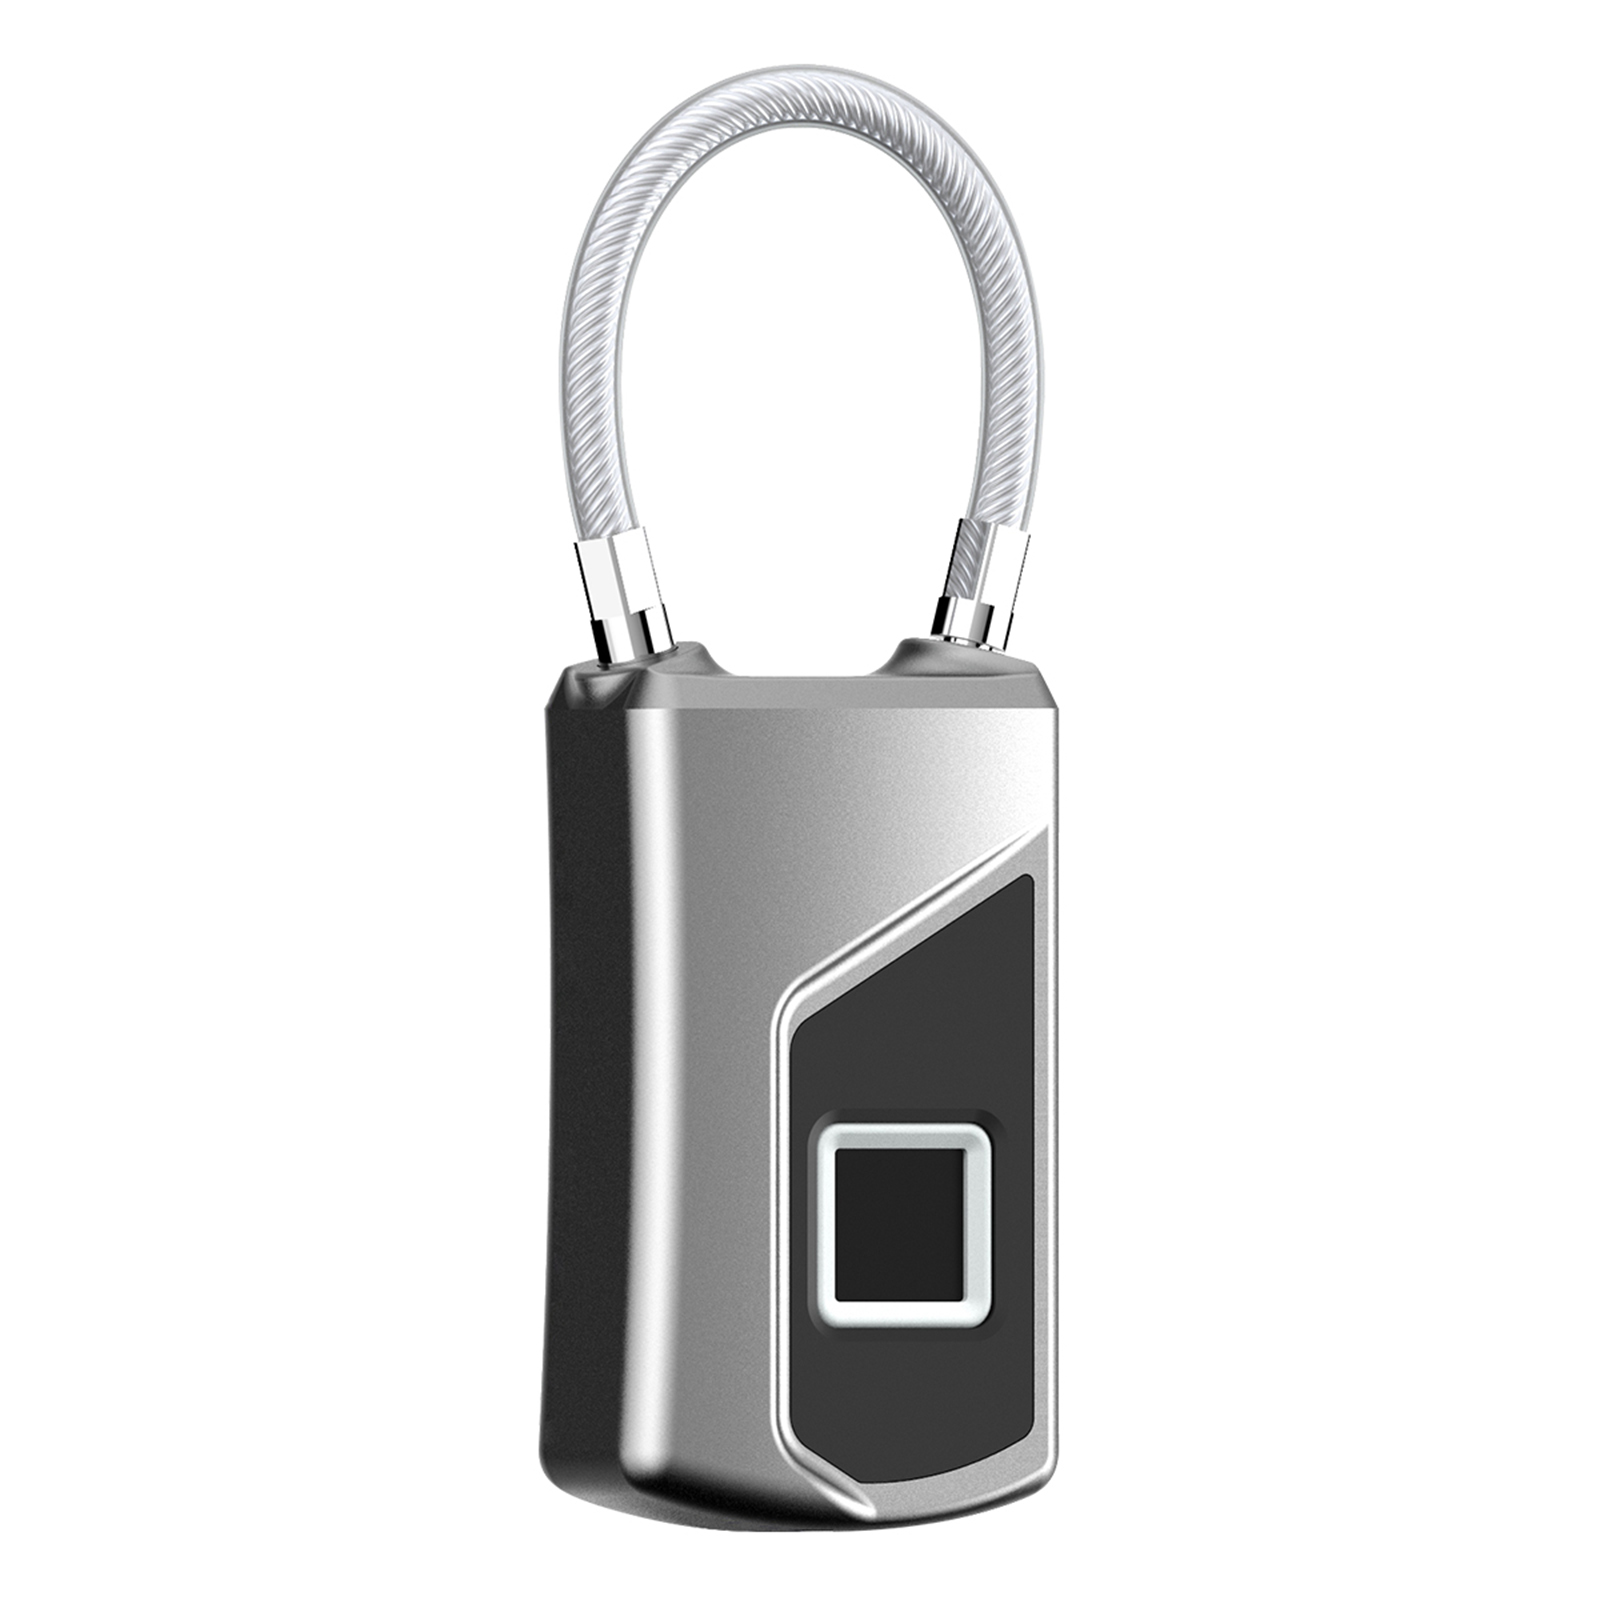 L1 Smart Biometric Fingerprint Lock Usb Rechargeable Anti-theft Security Padlock